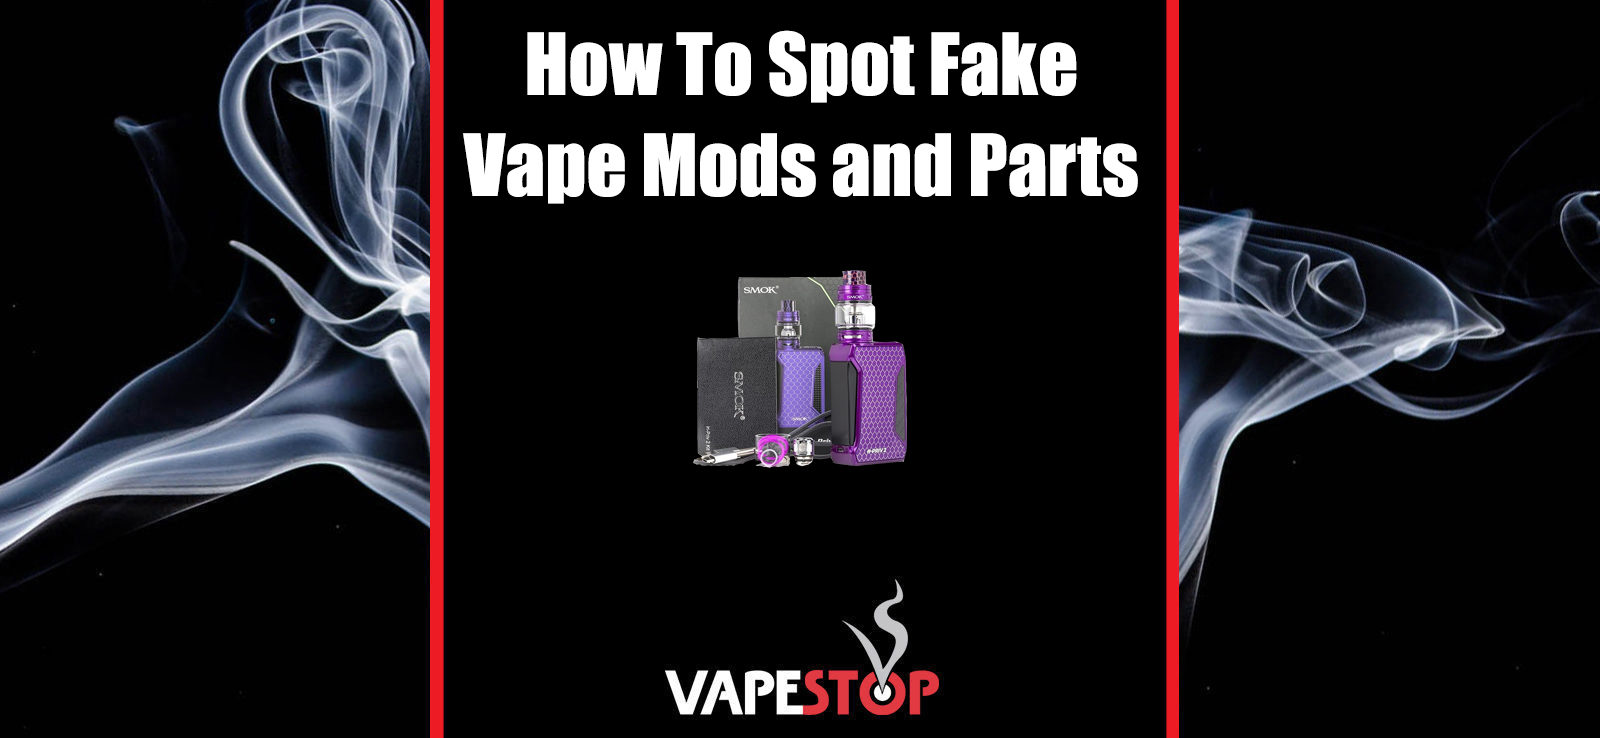 how to spot fake vape mods and parts blog featured image - vapestop